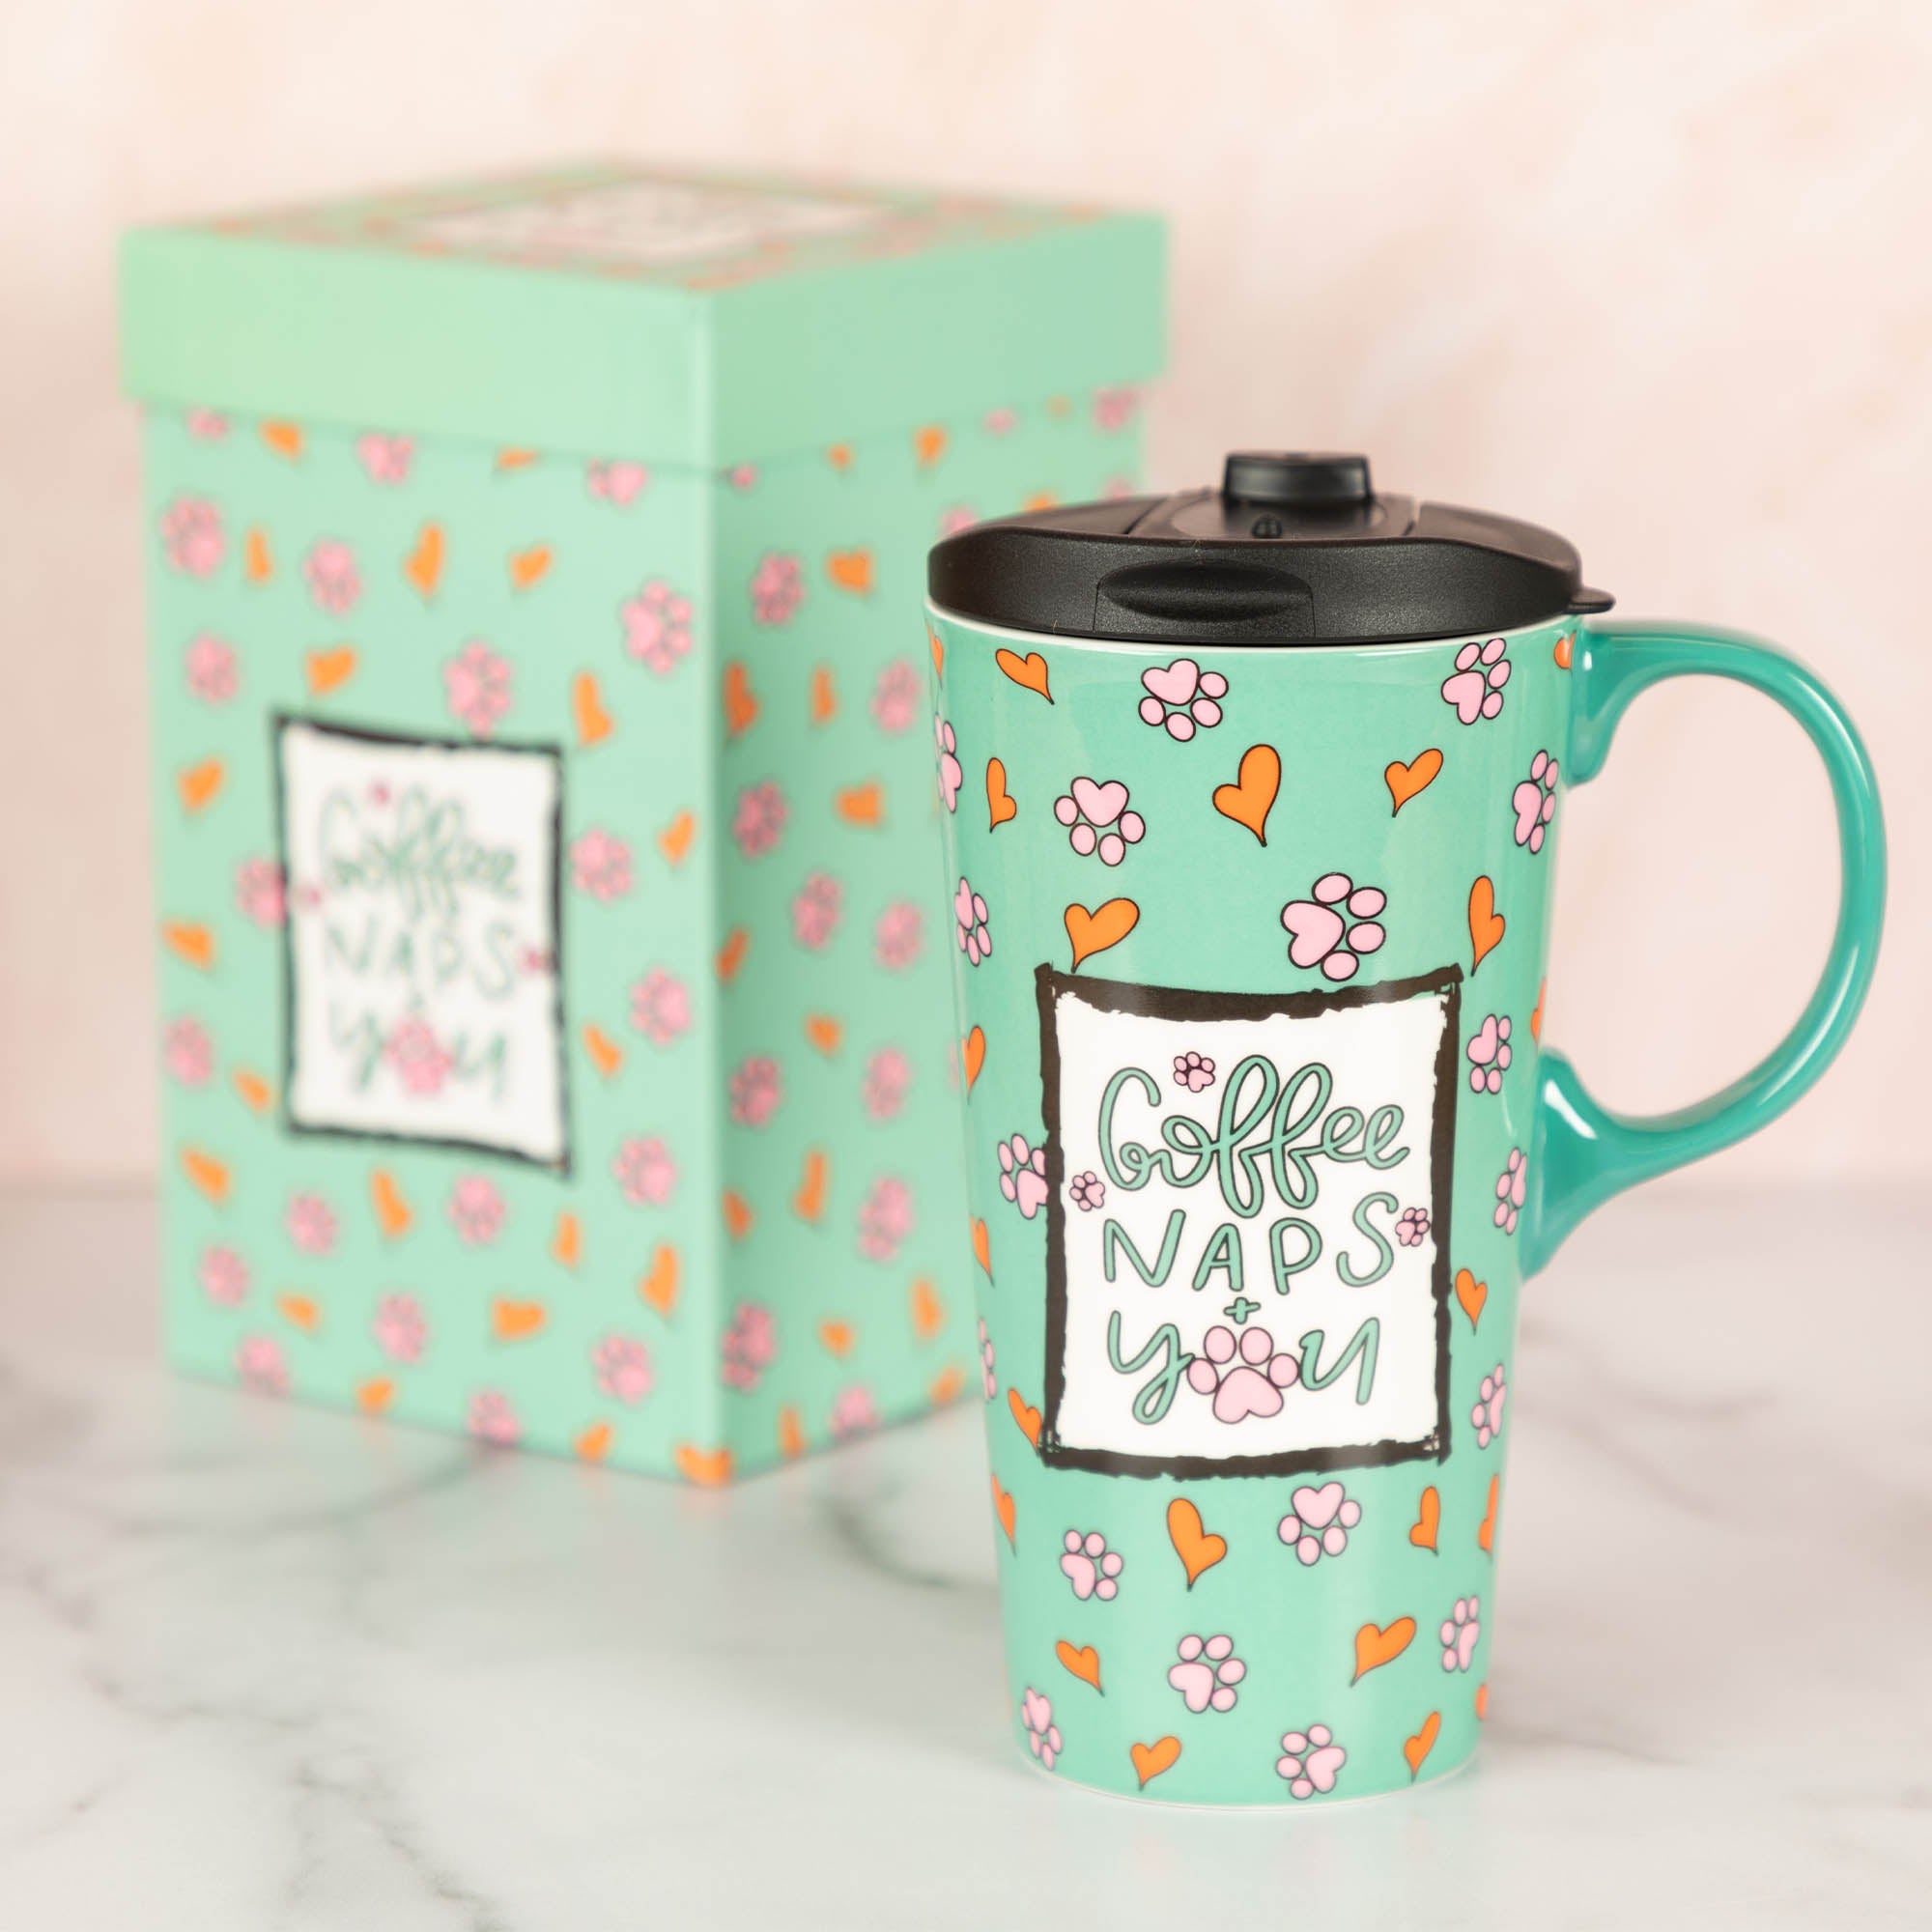 Inspirational Ceramic Travel Coffee Mug , Matching Gift Box - Coffee Naps & Paws